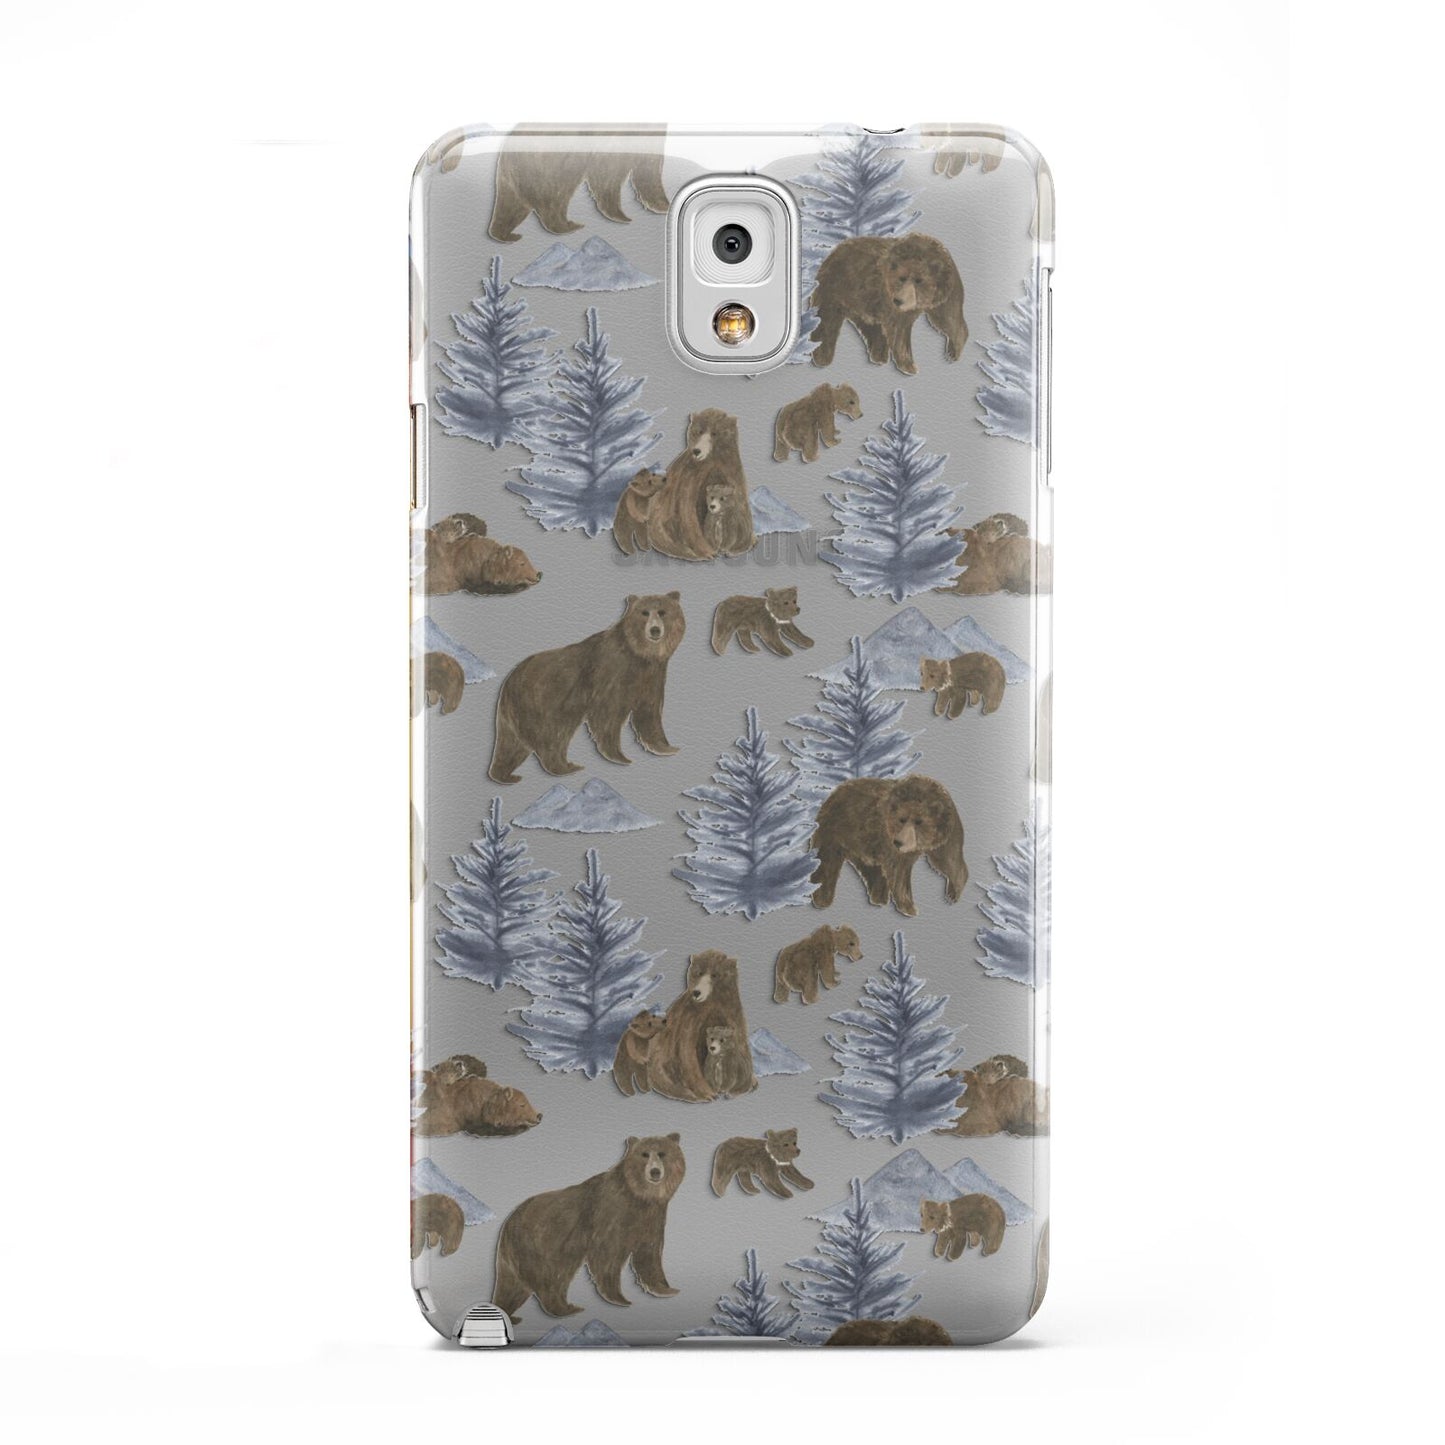 Brown Bear Samsung Galaxy Note 3 Case